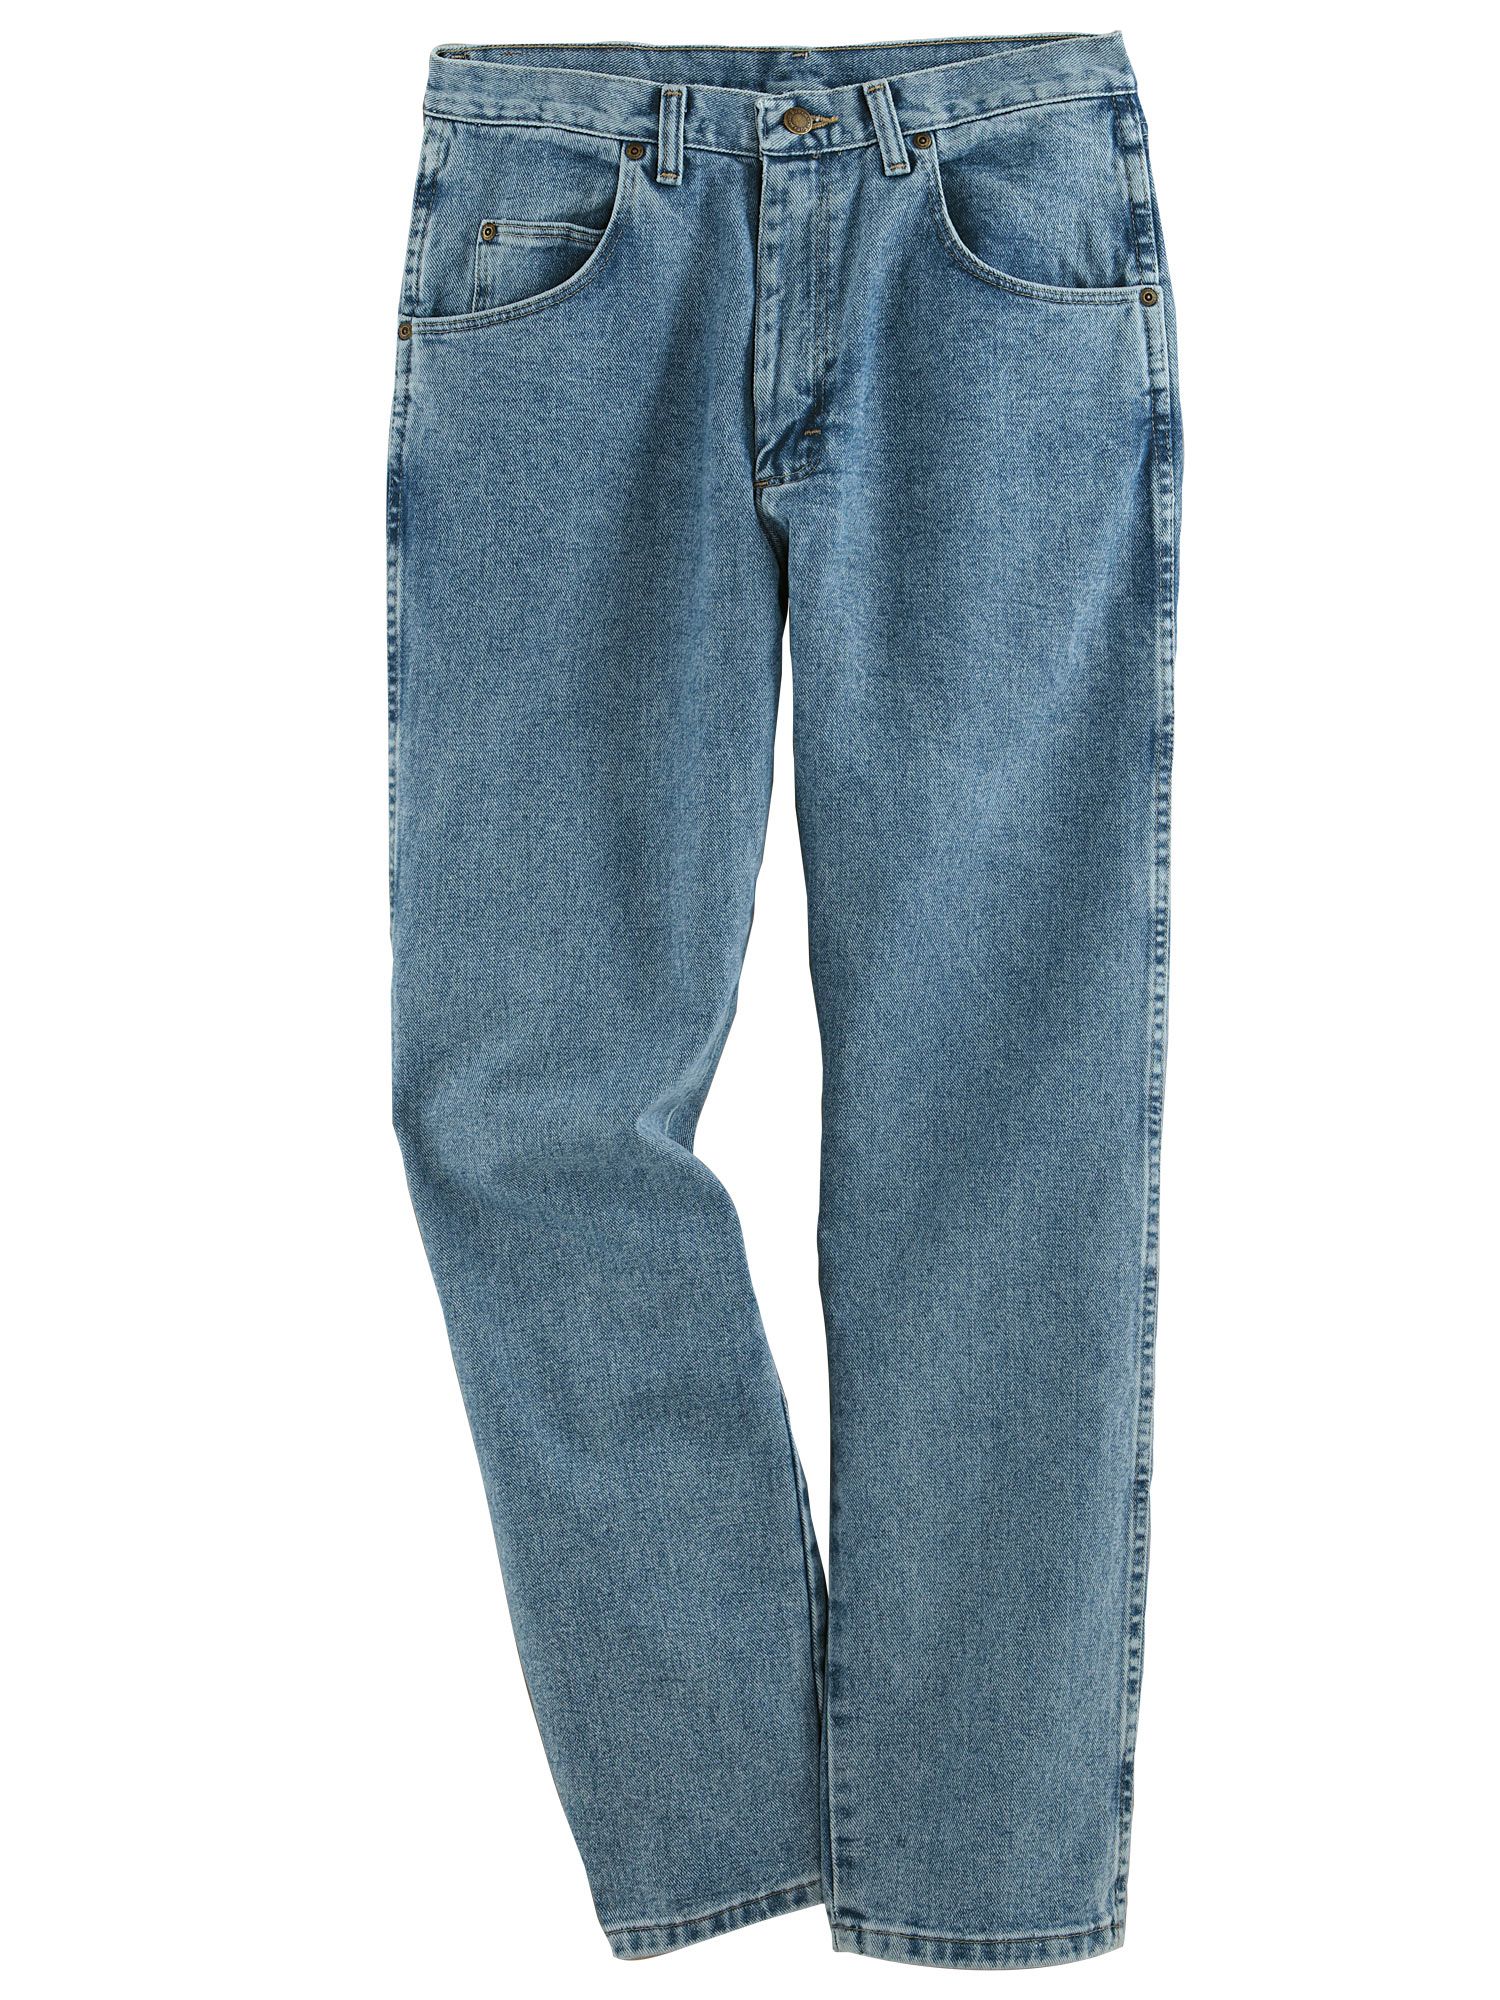 Men's Wrangler Jeans & Shorts - Relaxed & Comfort Fit | Blair